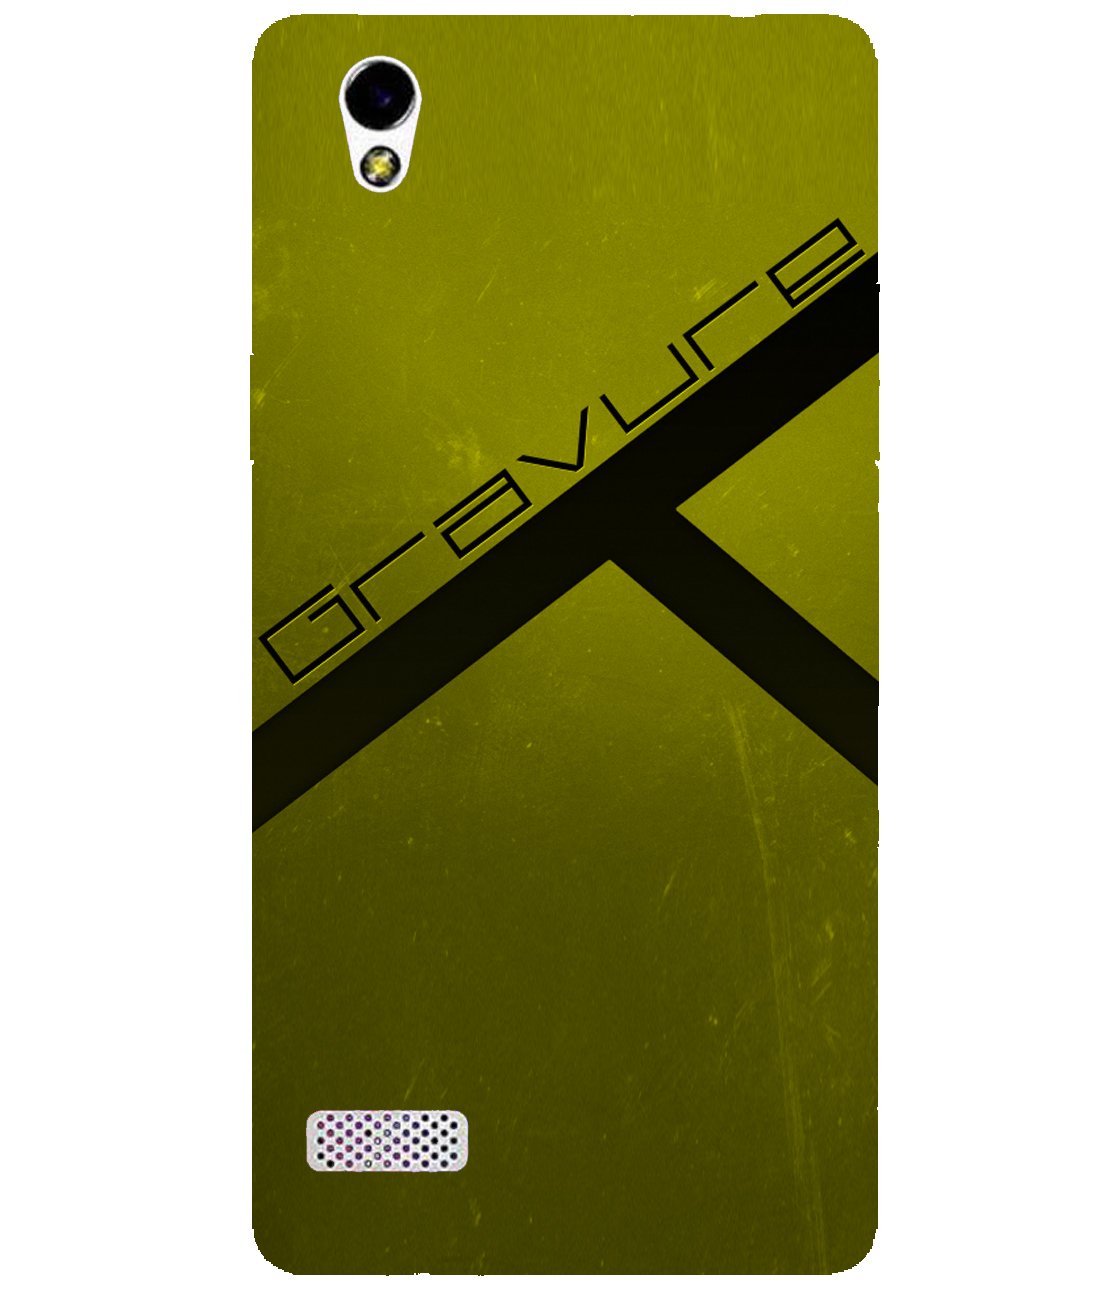 Csk Wallpaper Mobile Case Cover For Oppo Miror - Smartphone - HD Wallpaper 